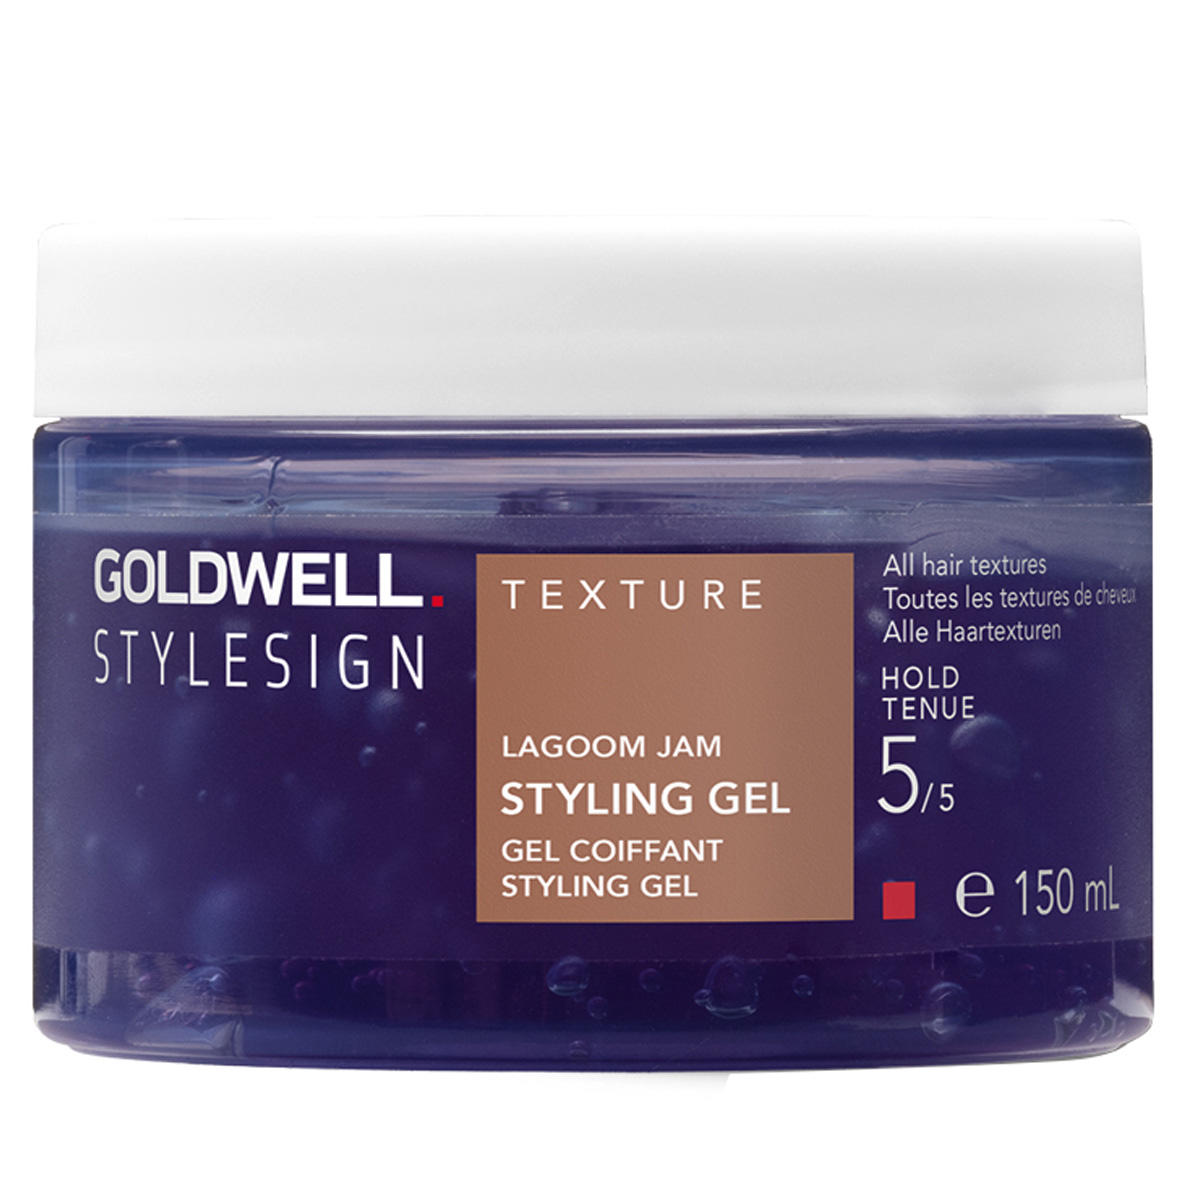 Goldwell StyleSign Texture Lagoom Jam Styling Gel  - 1